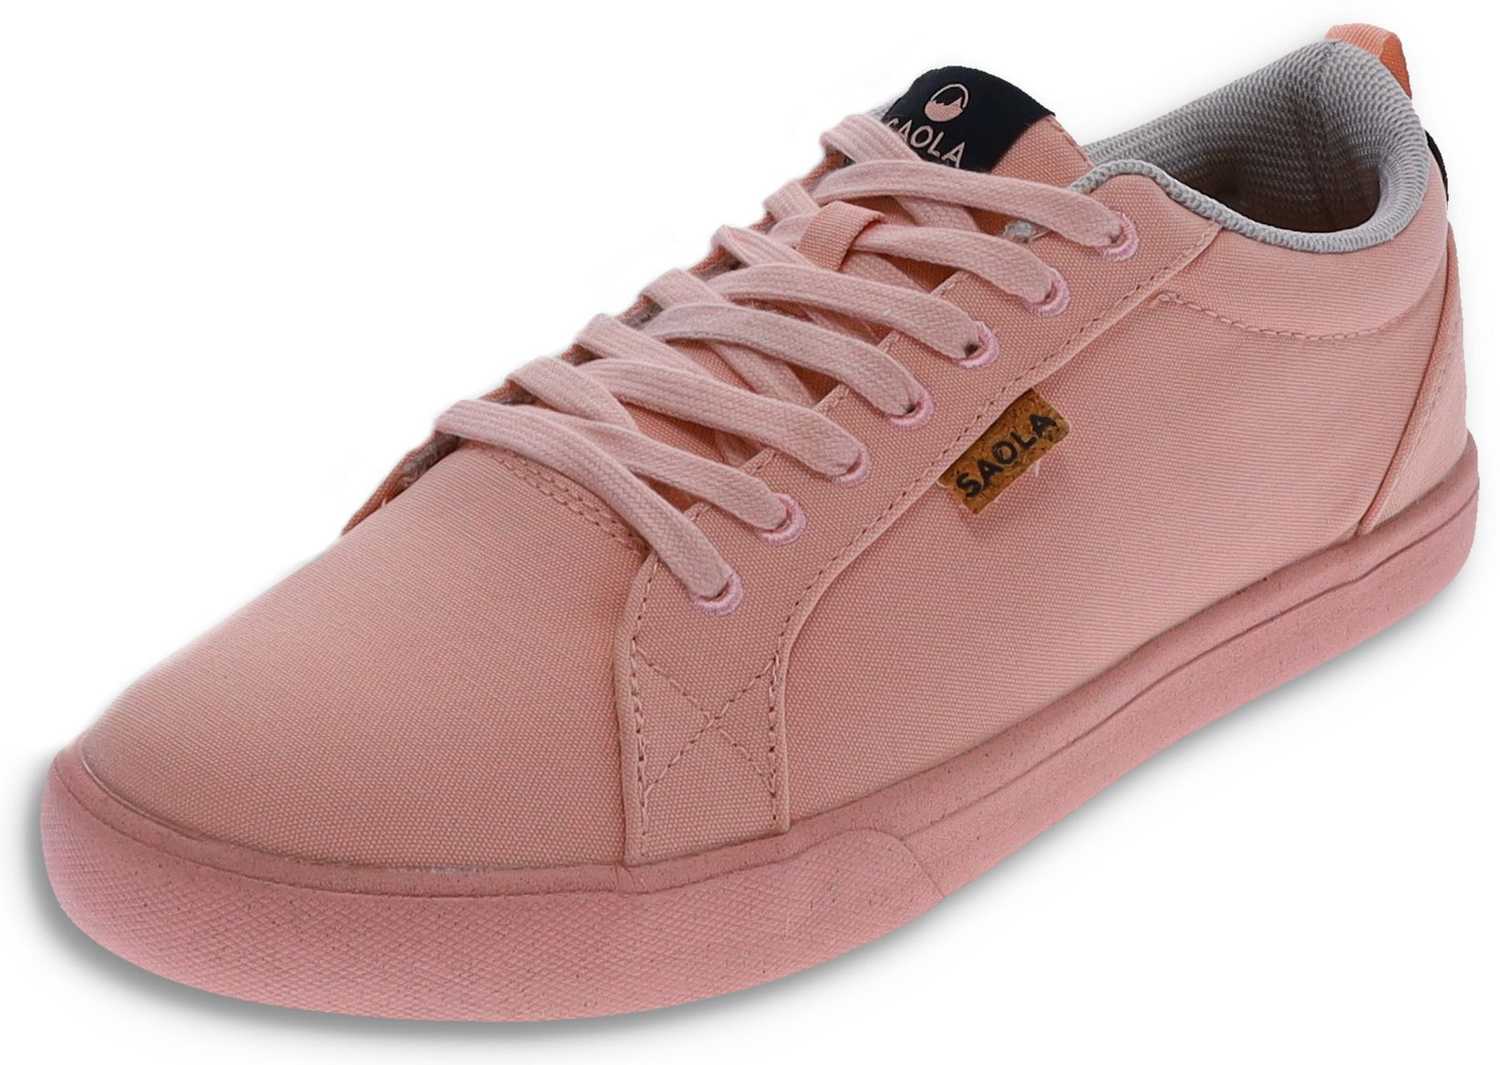 CANNON Rose Gold veganer Damen Sneaker - pink von Saola